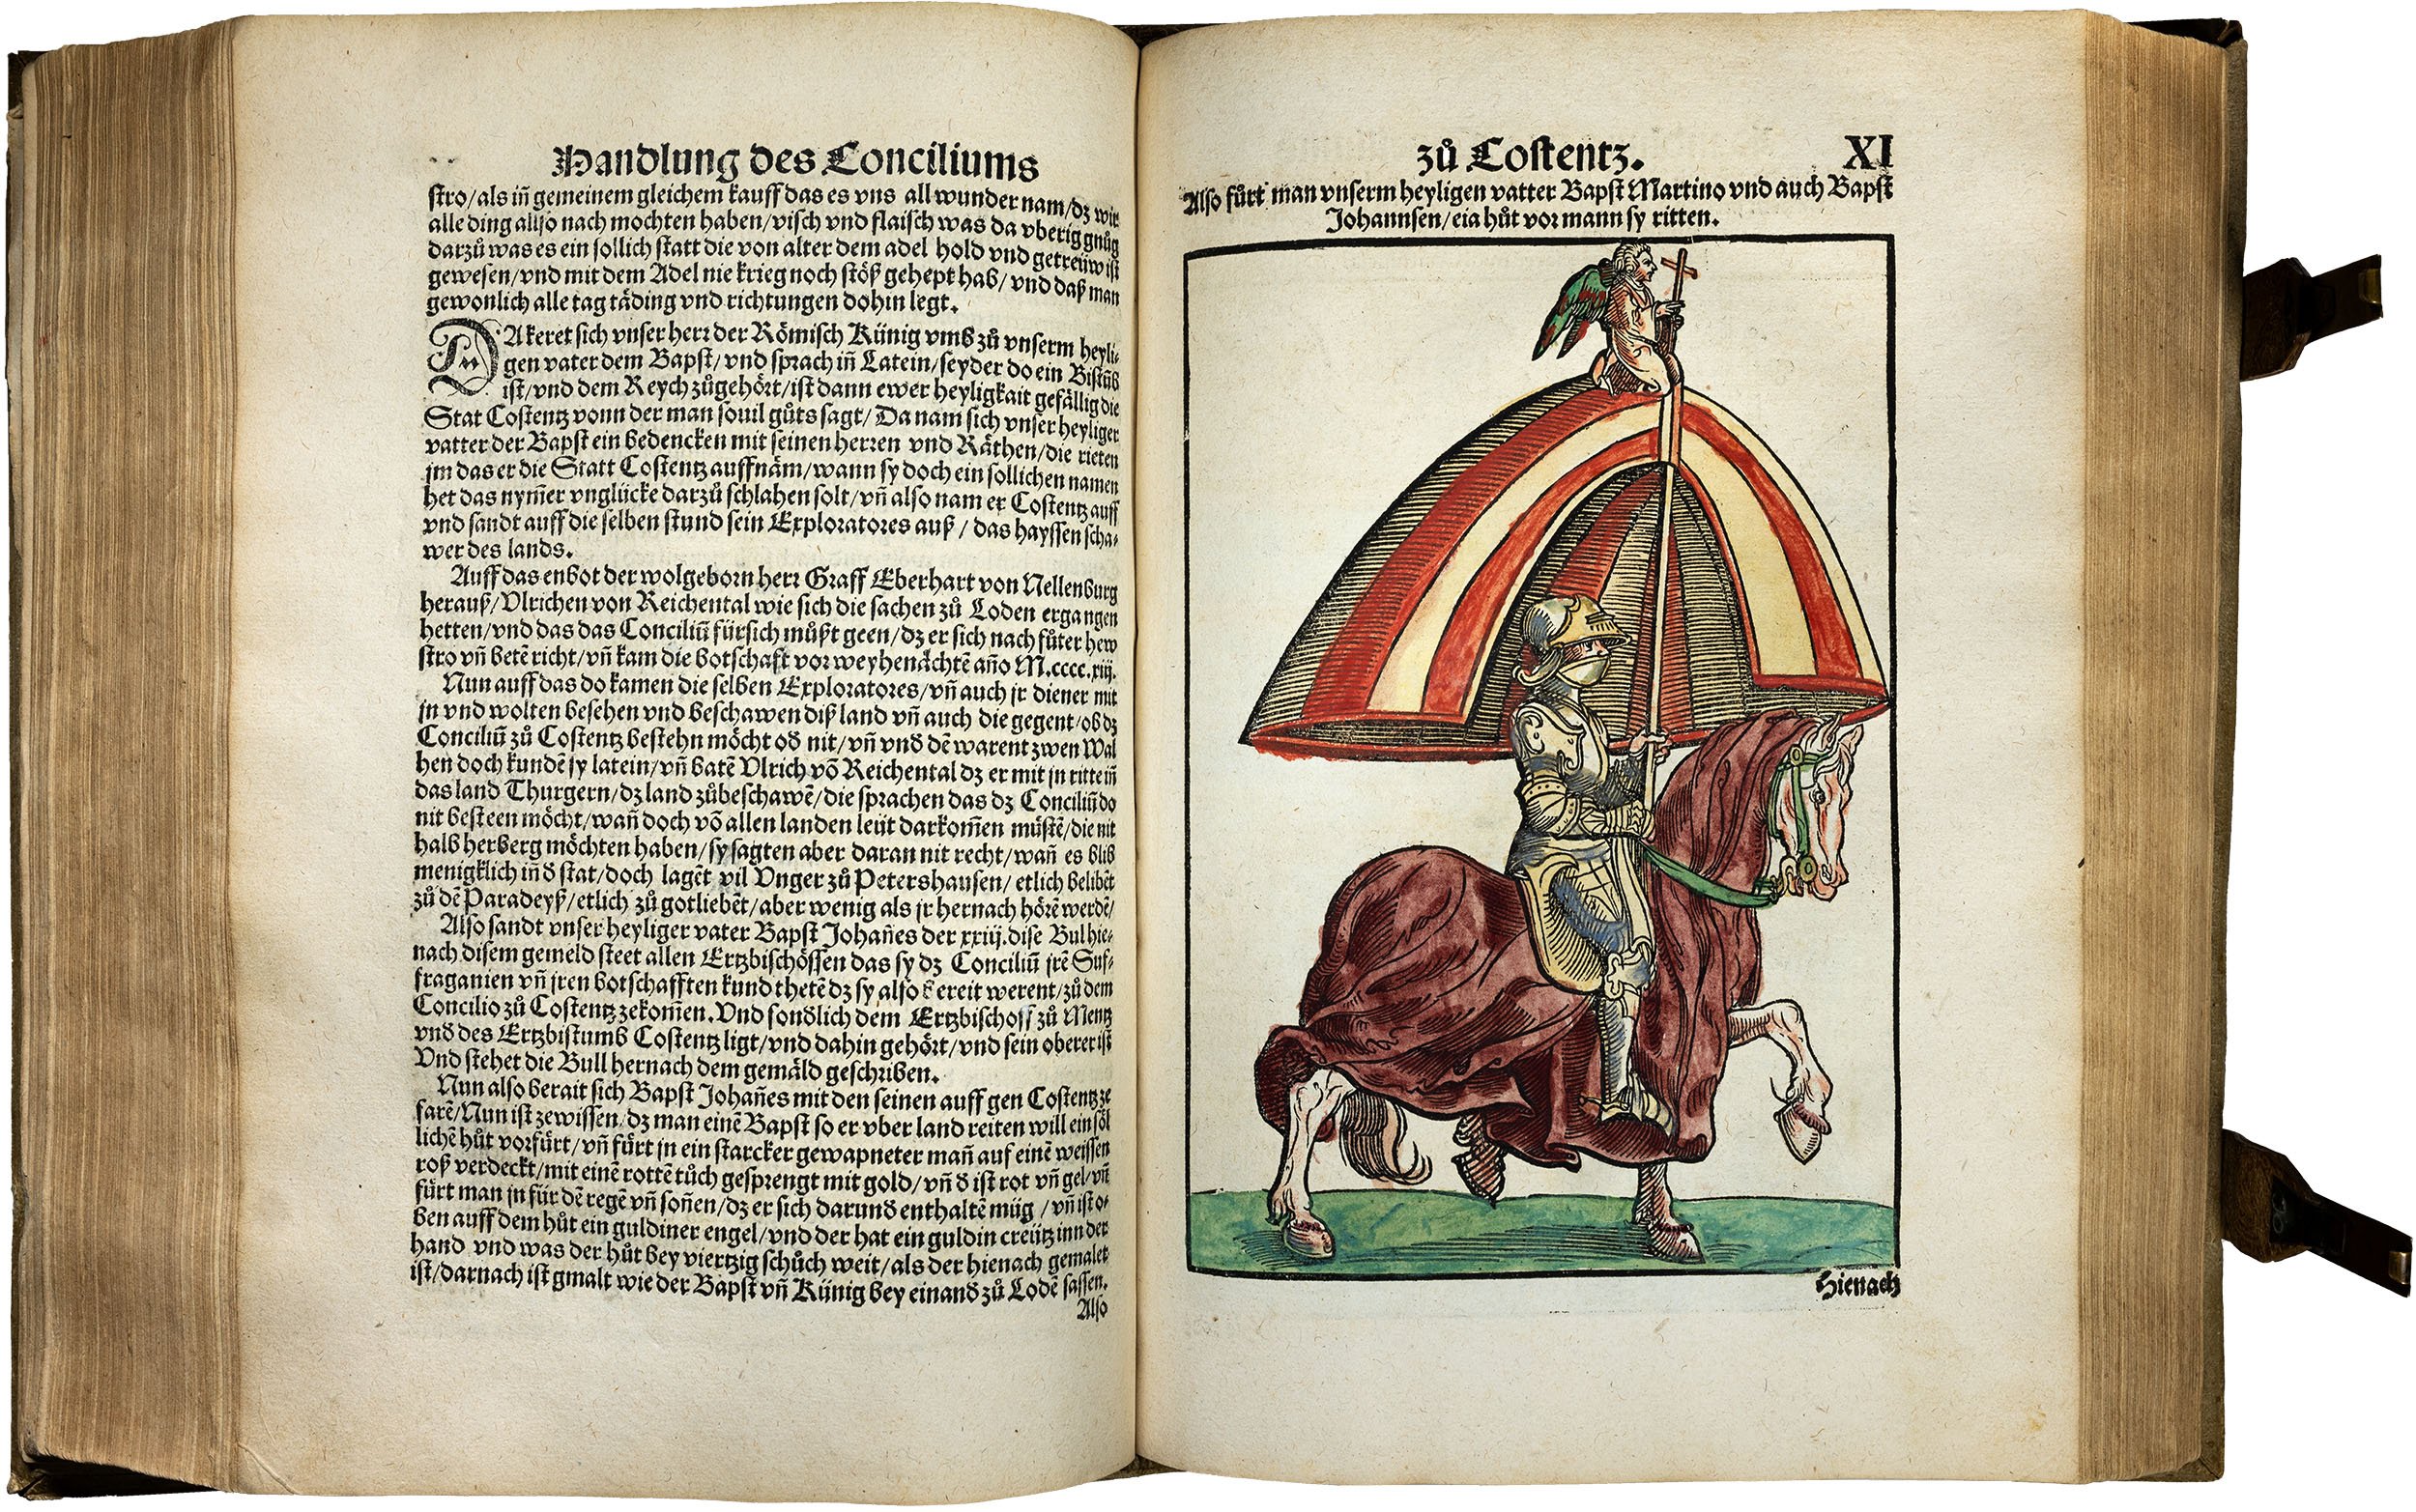 Ulrich-Richental-Konstanzer-Konzil-chronik-council-1536-coloured-court-orders-39.jpg